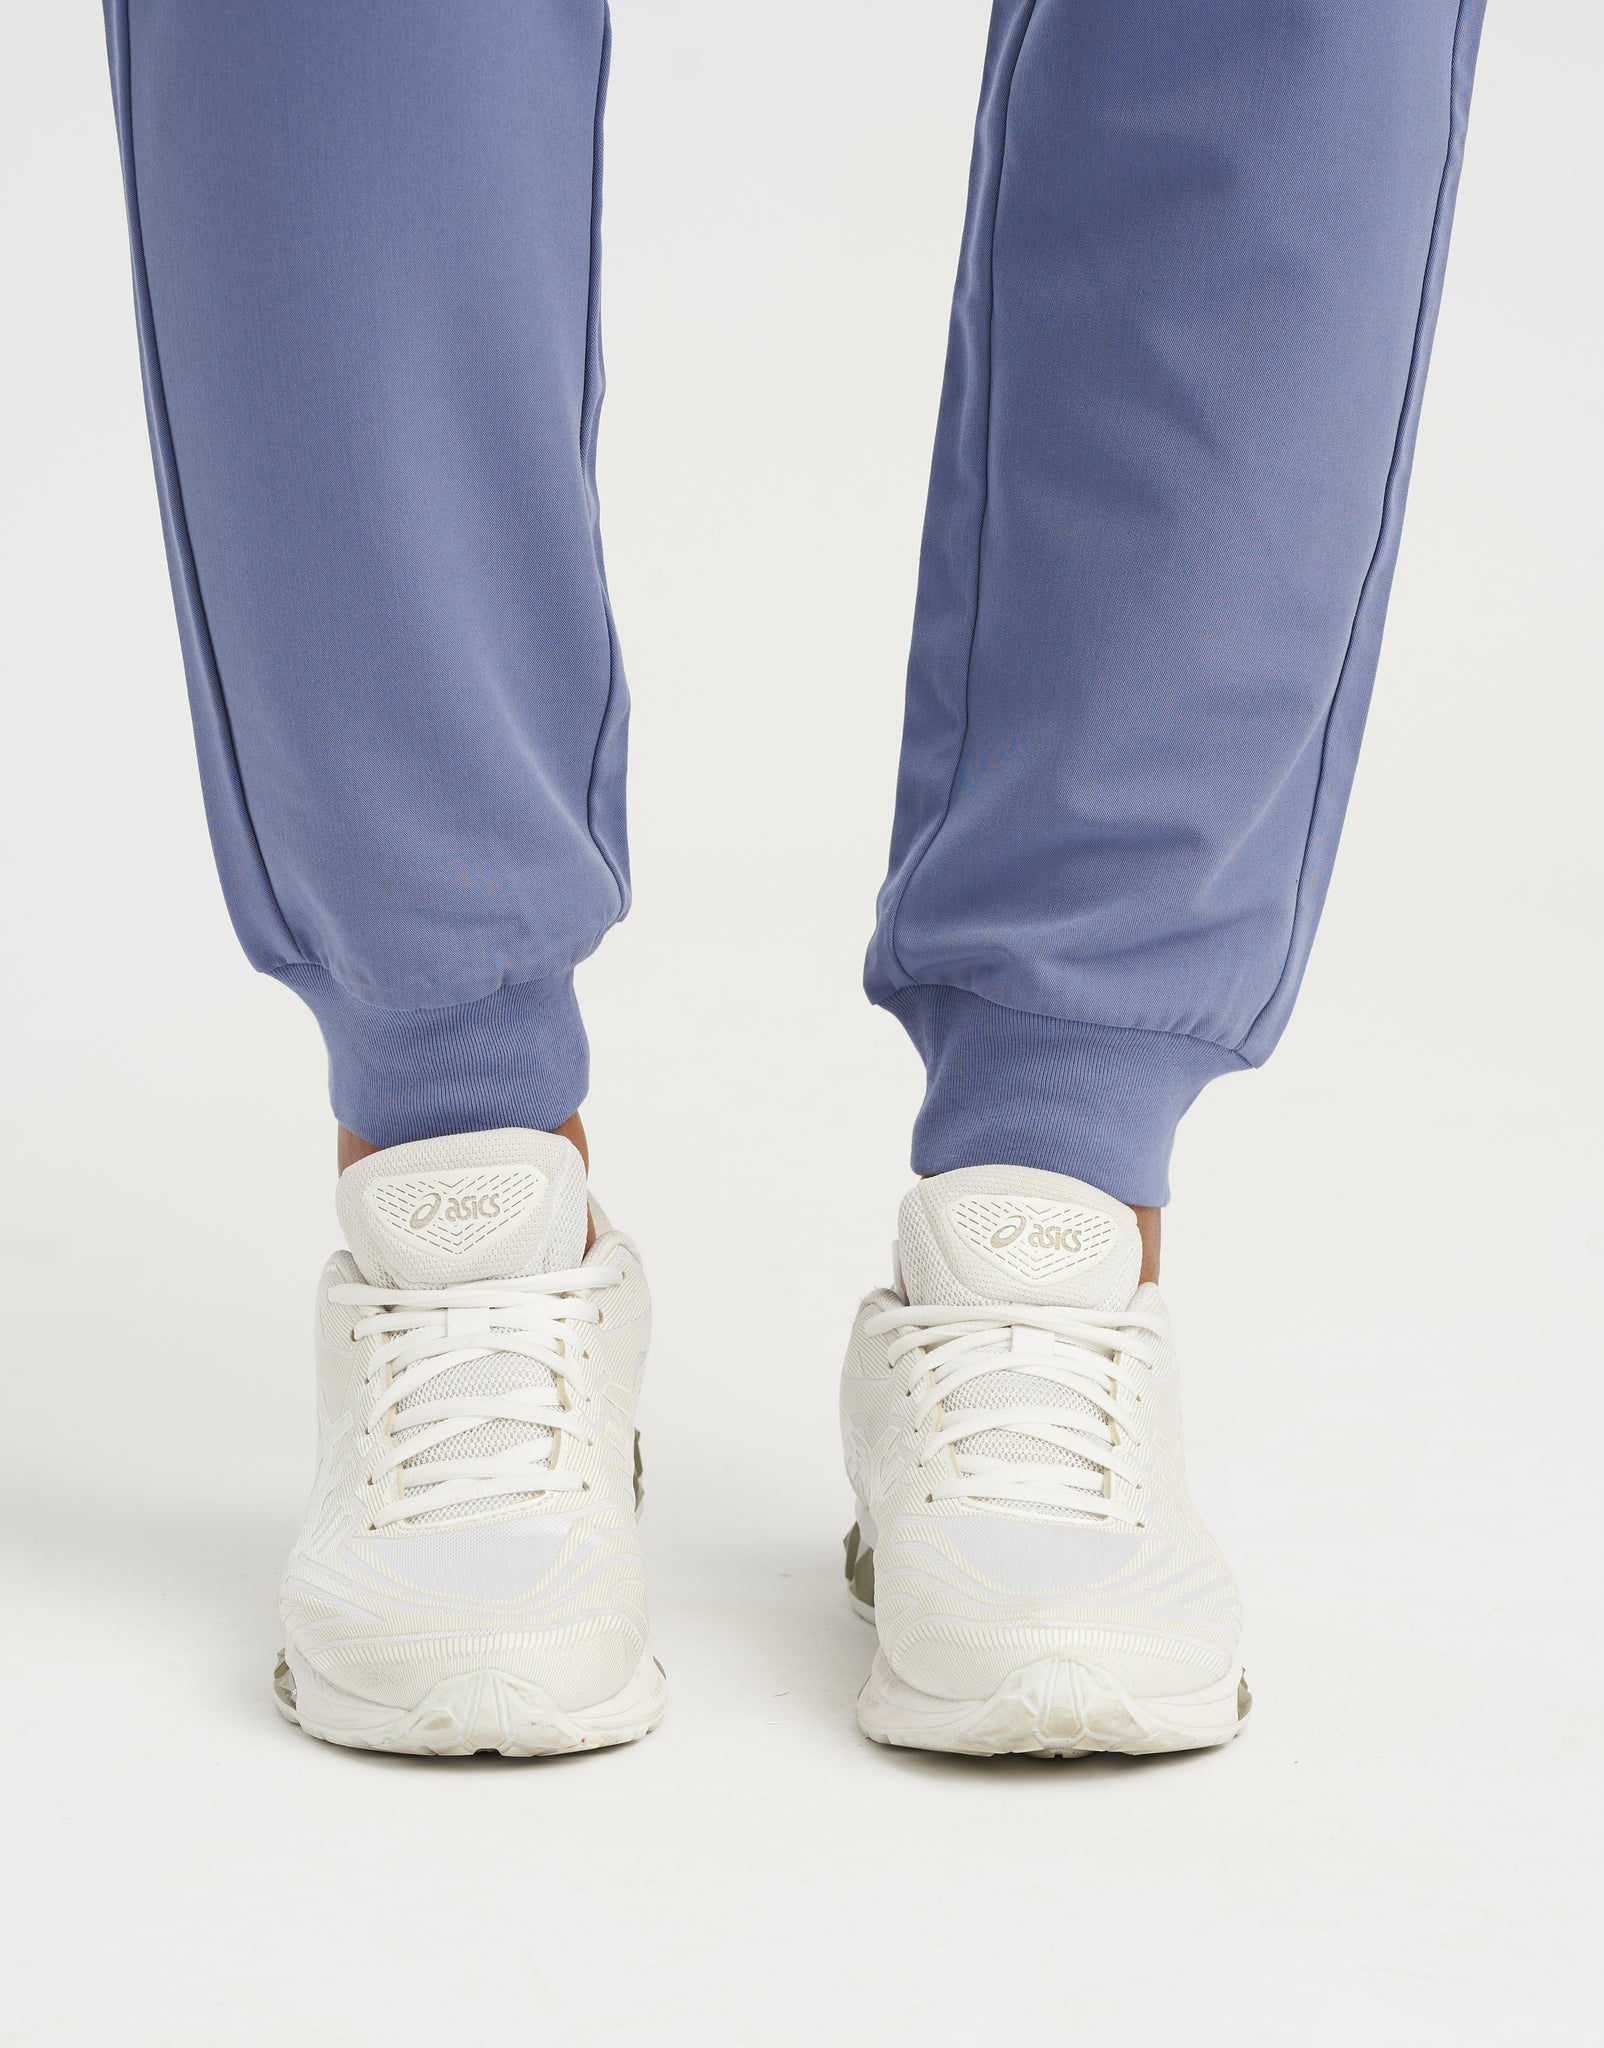 Essential Jogger Scrub Pants - Nova Blue